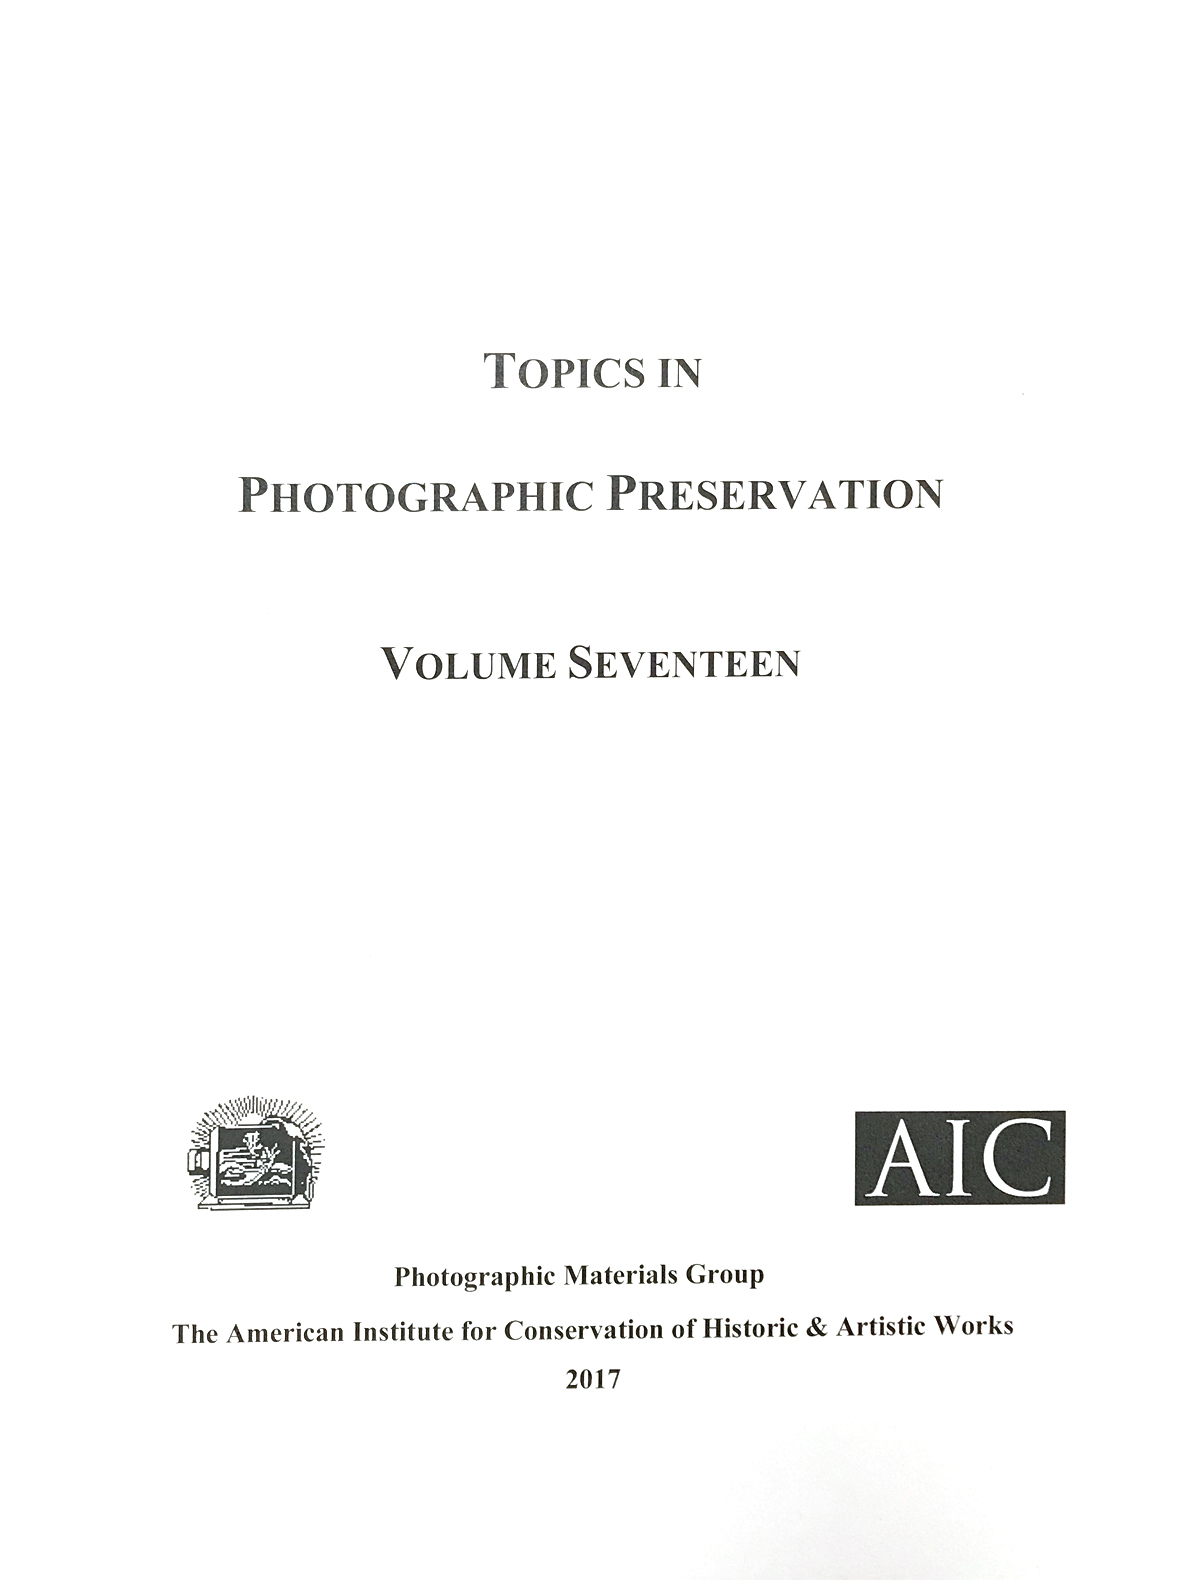 Topics in Photographic Preservation, Vol. 17 (2017)